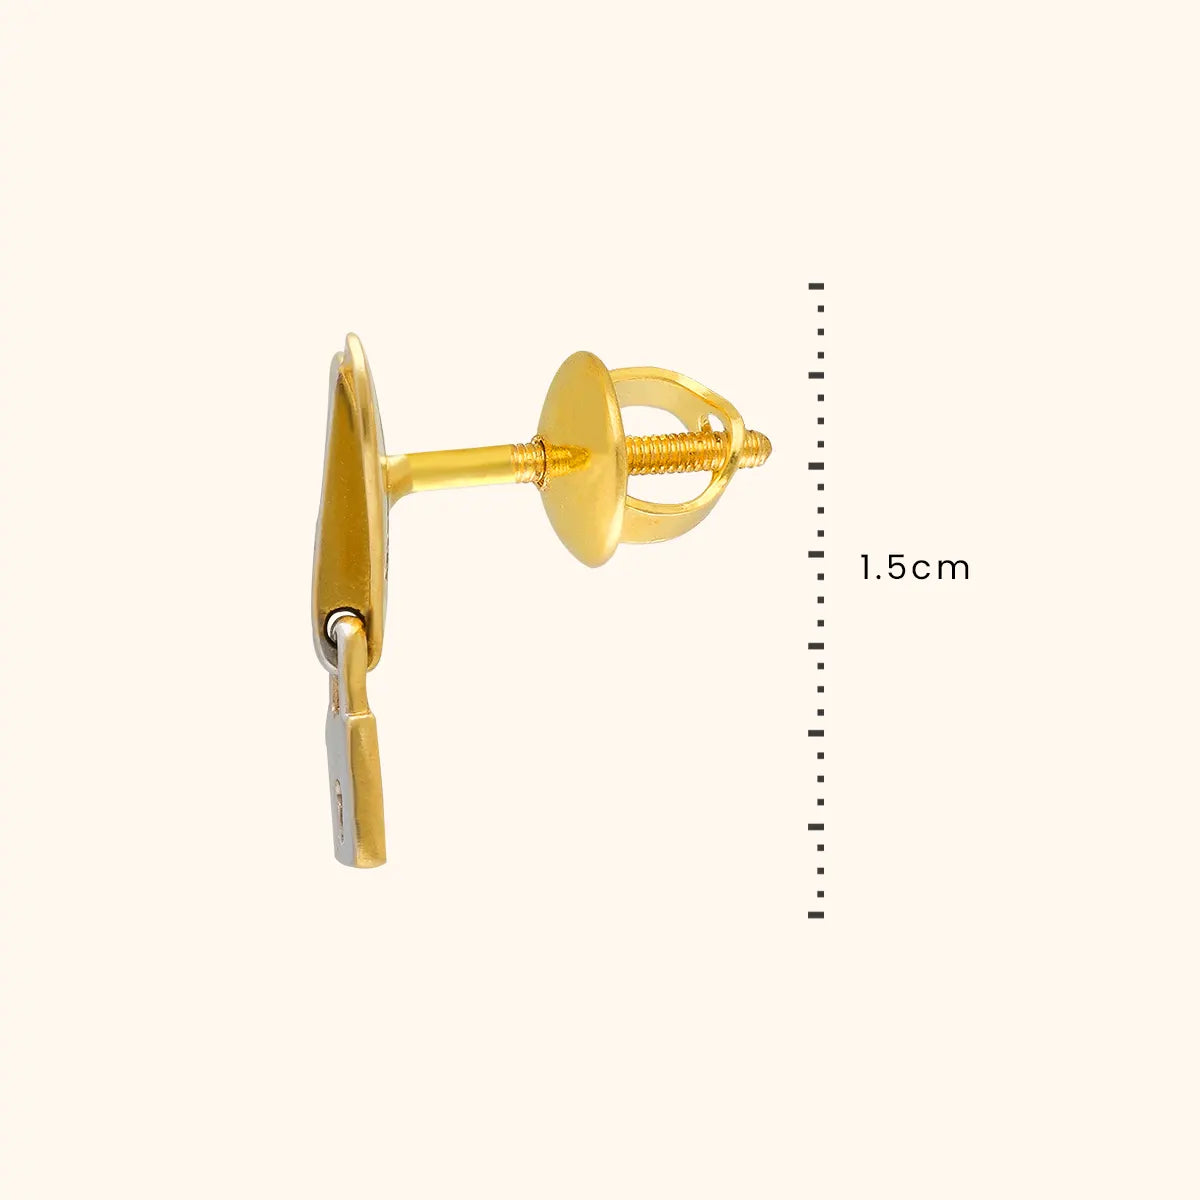 Buy 14K Yellow Gold Earring Backs Ear Locking (6 Piece) at Amazon.in